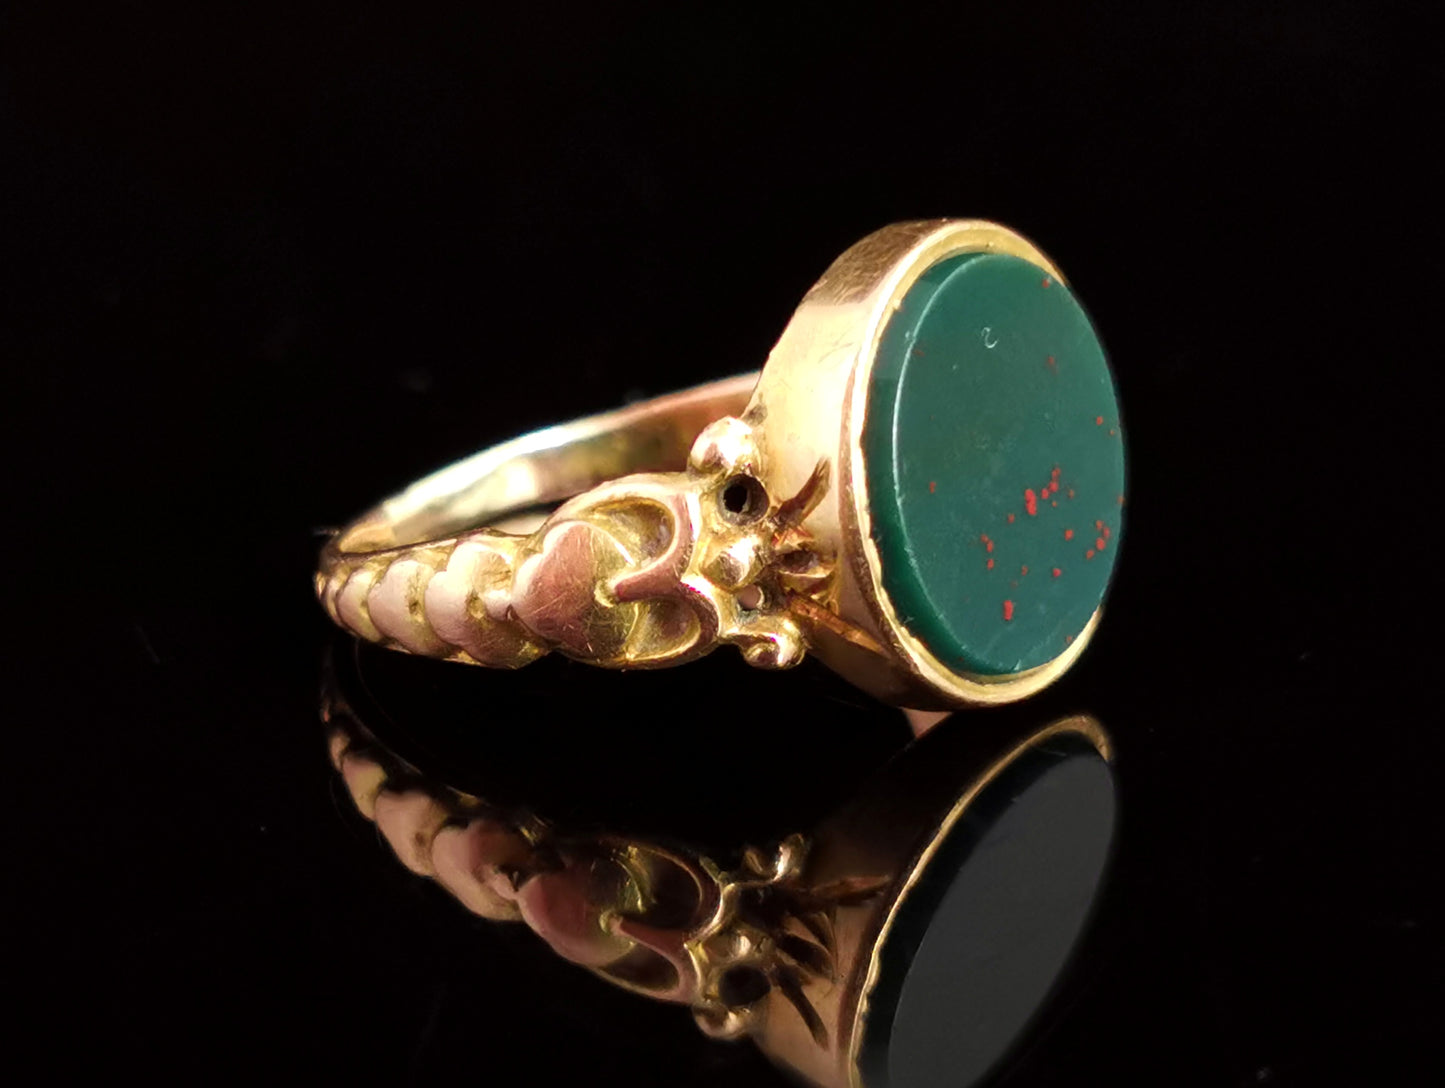 Antique 9ct gold Bloodstone signet ring